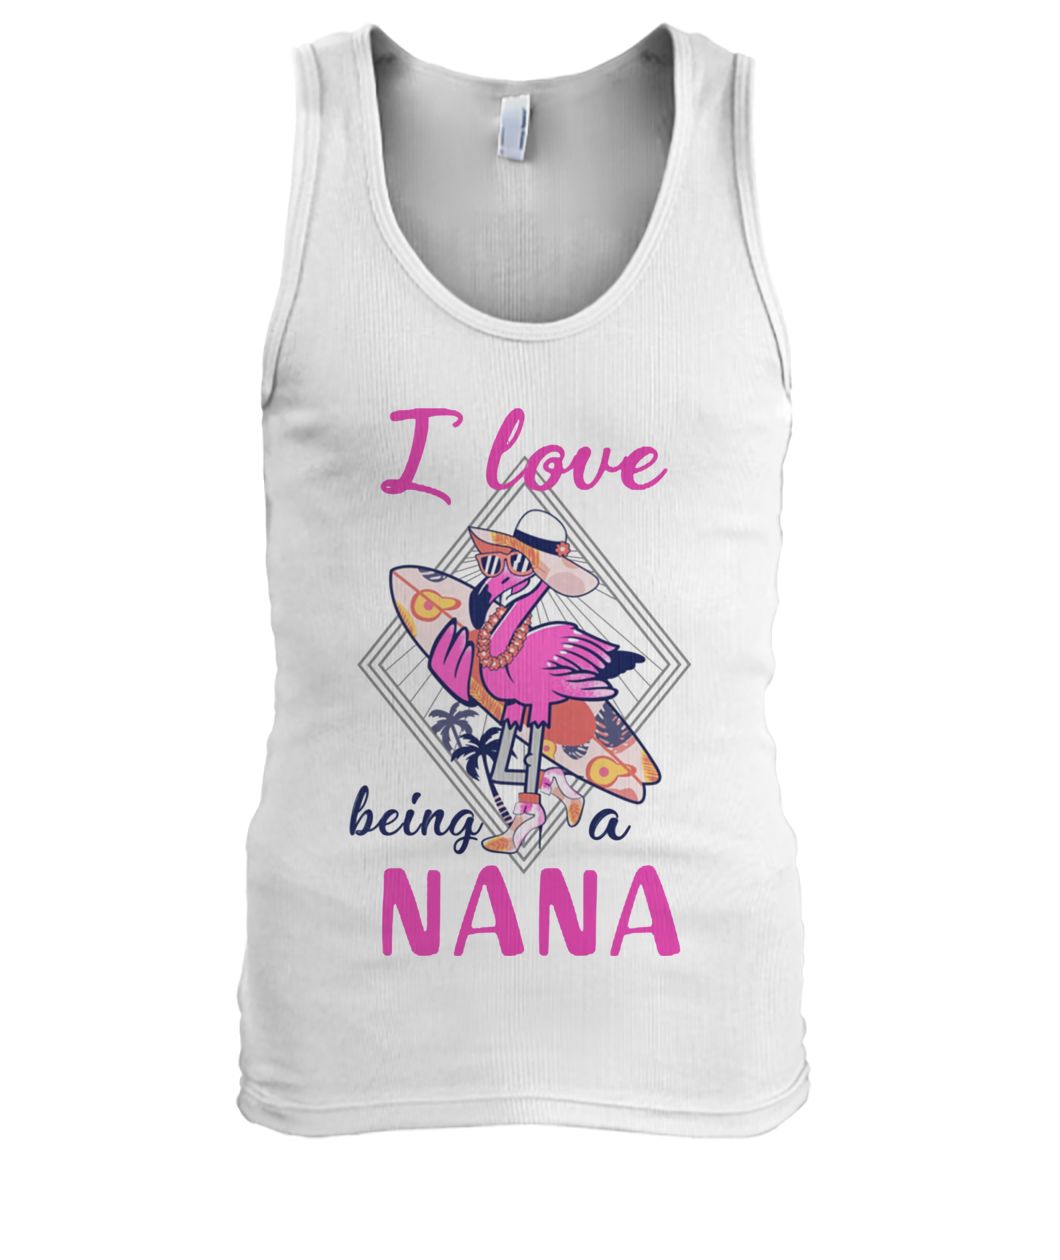 I love being a nana flamingo men's tank top